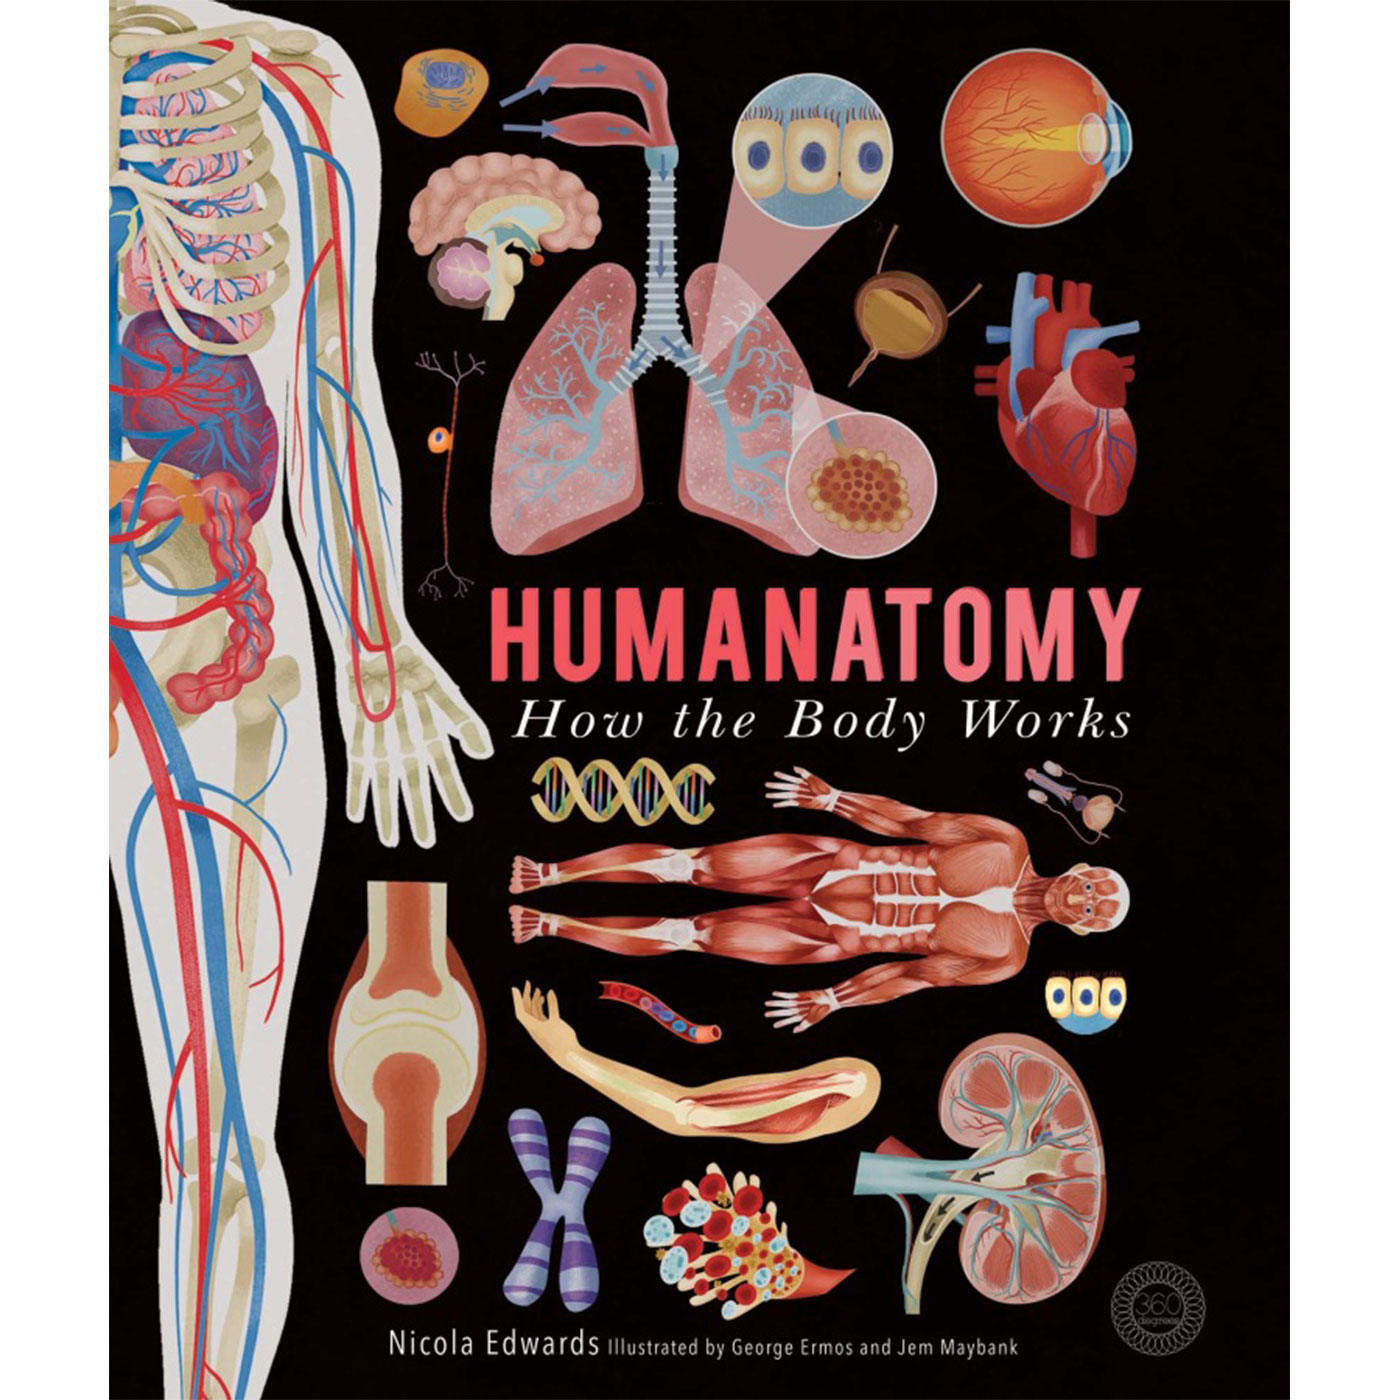  Humanatomy